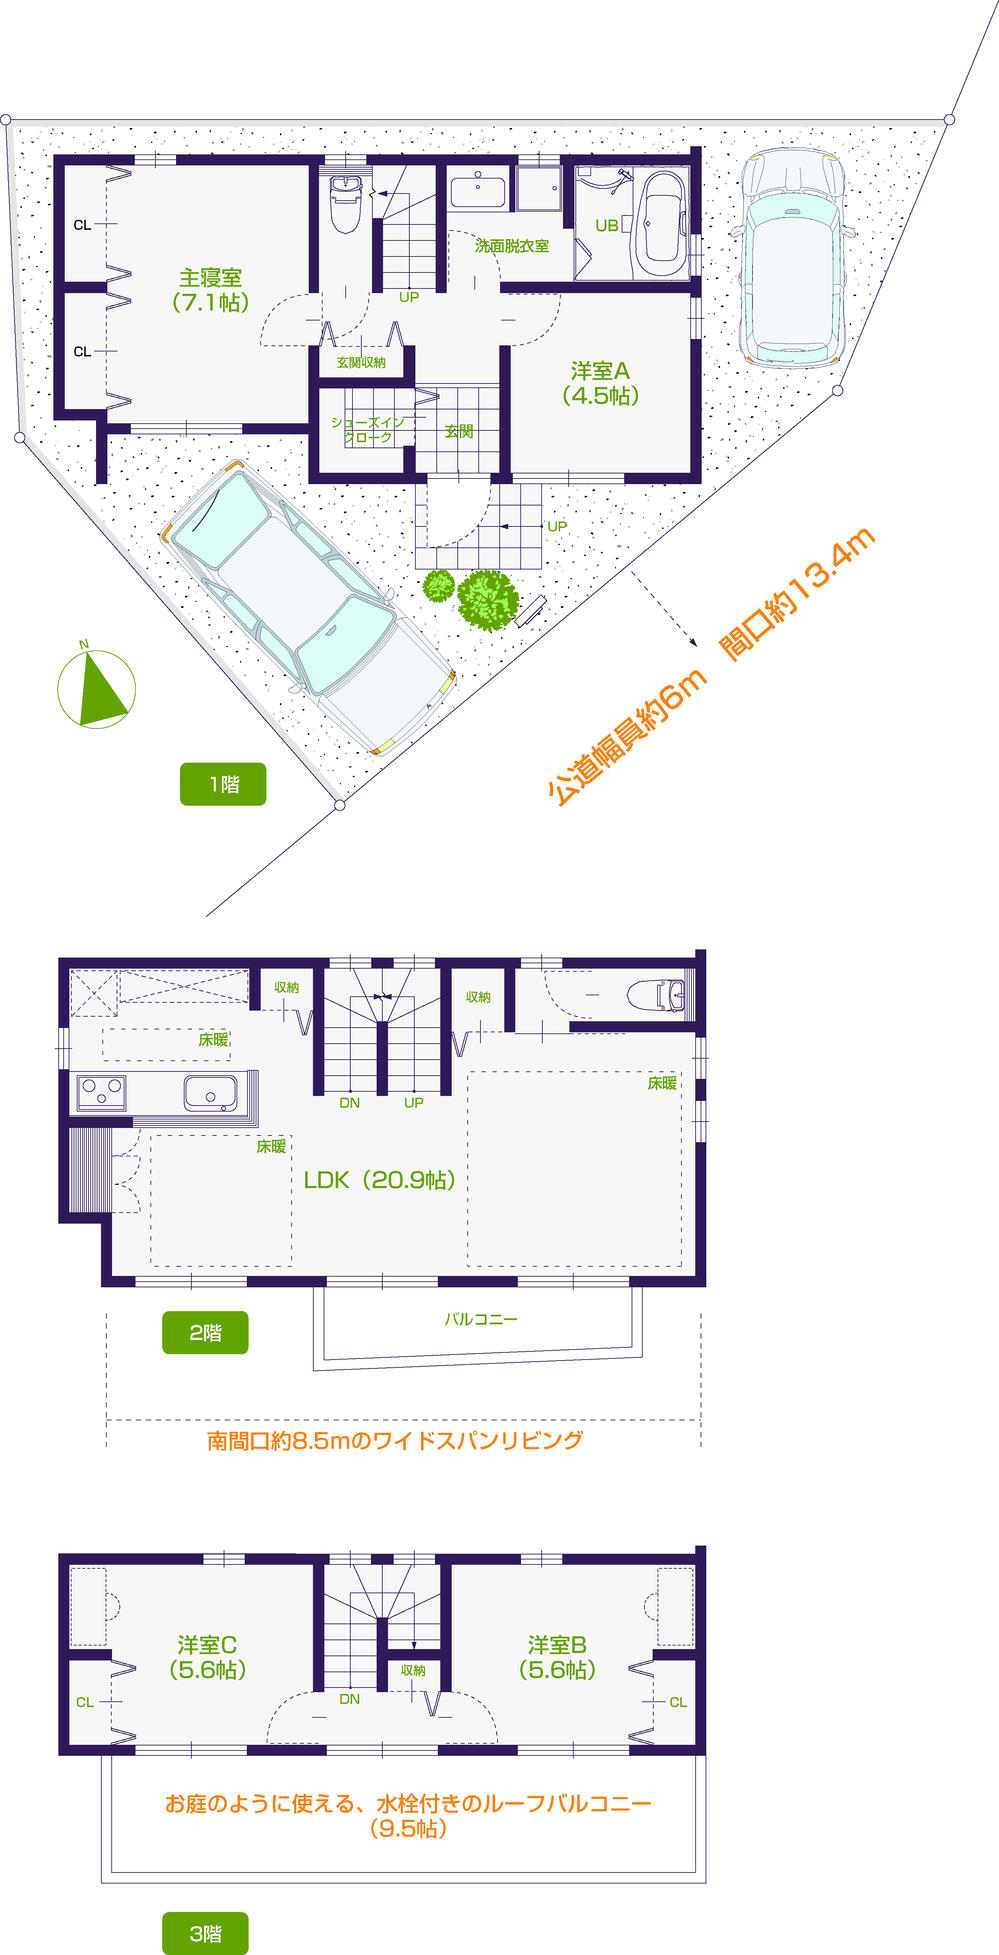 Floor plan. Price 36,850,000 yen, 4LDK+S, Land area 84.32 sq m , Building area 104.4 sq m